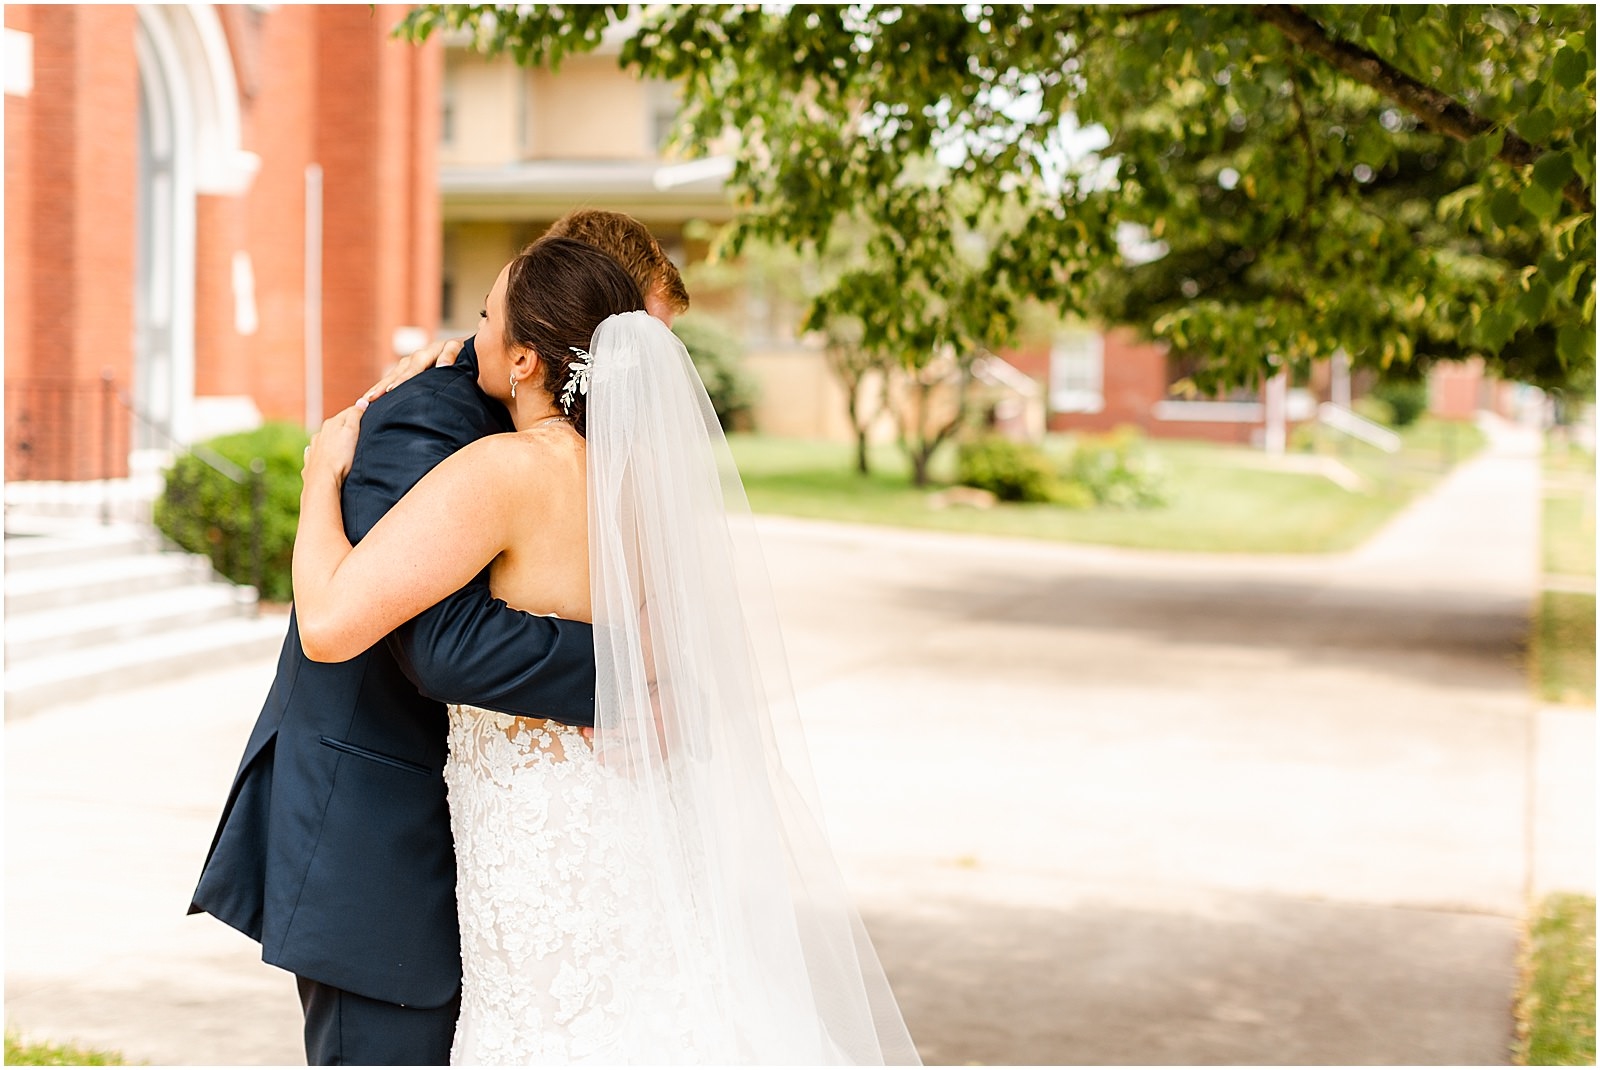 Deidra and Andrew | A Huntingburgh Indiana Wedding Bret and Brandie | Evansville Photographers | @bretandbrandie-0048.jpg